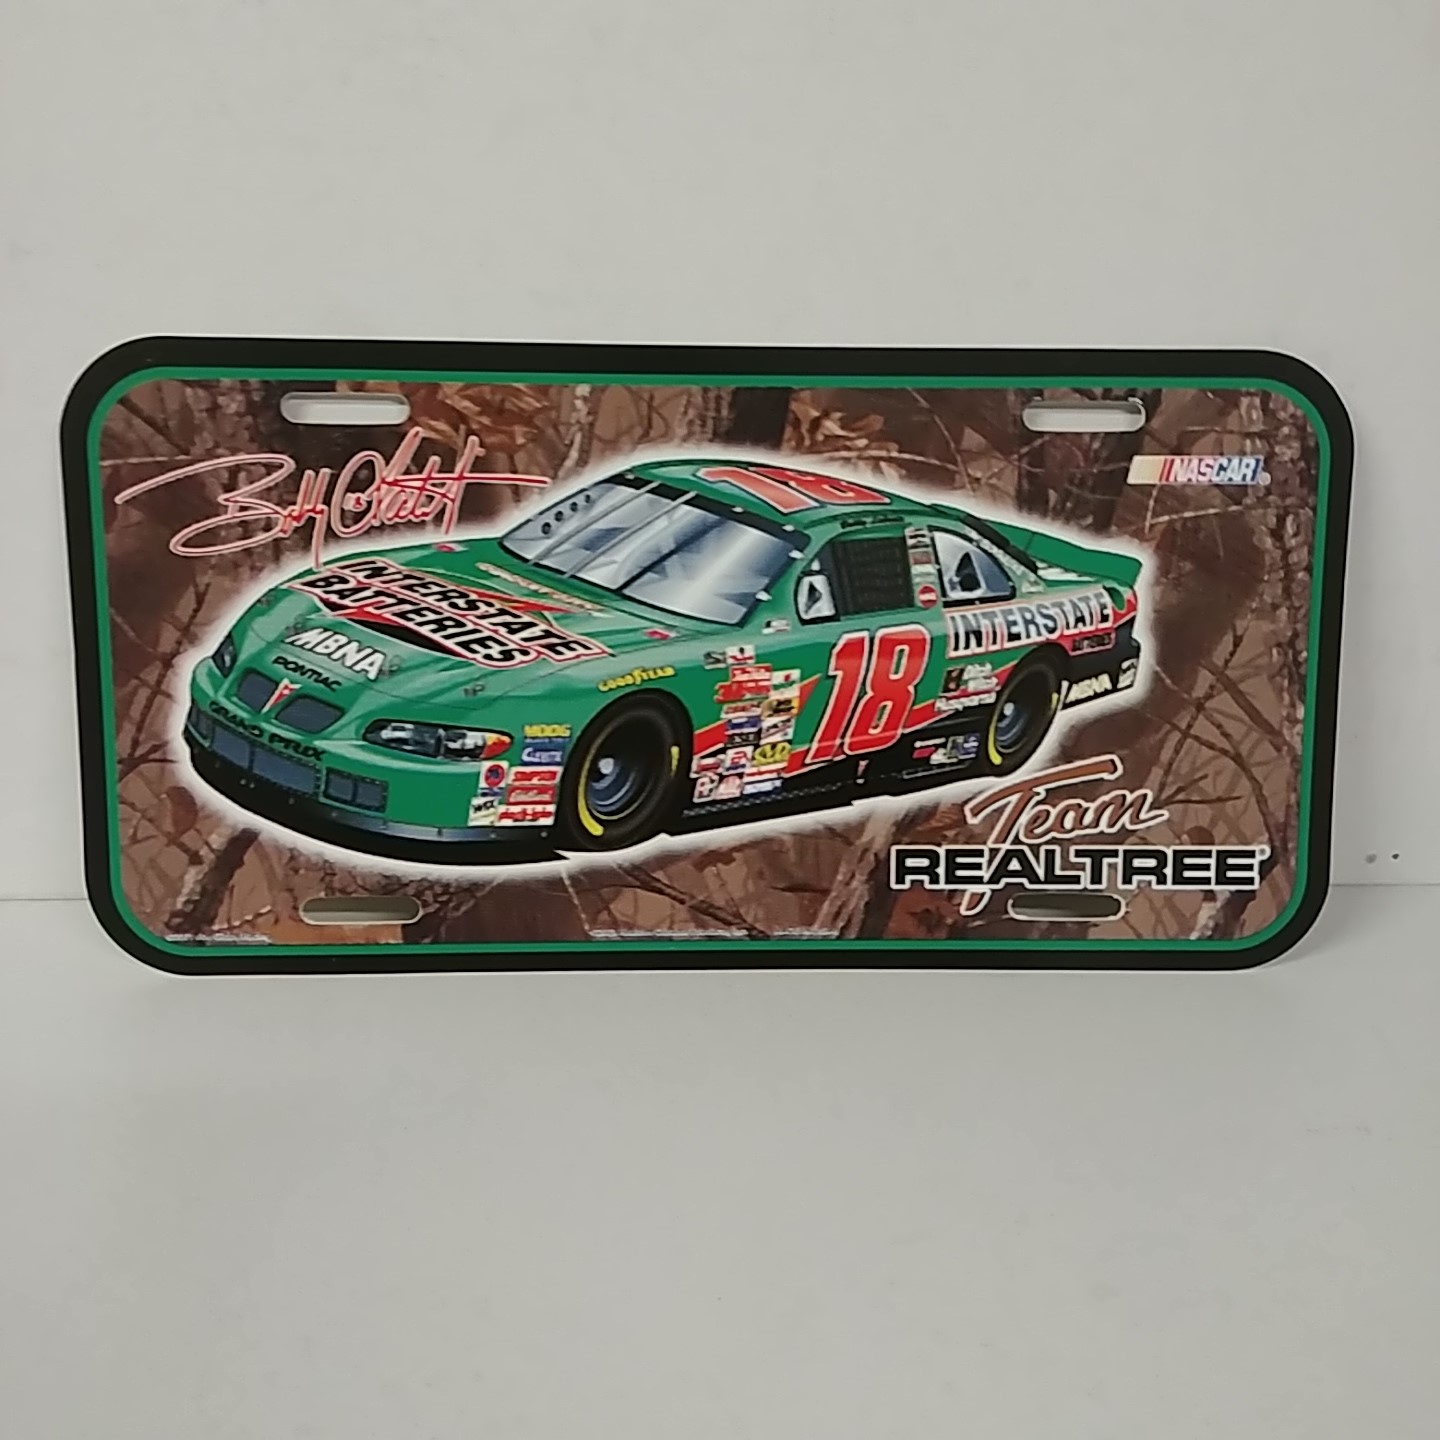 2001 Bobby Labonte Interstate Batteries "Camo" plastic license plate